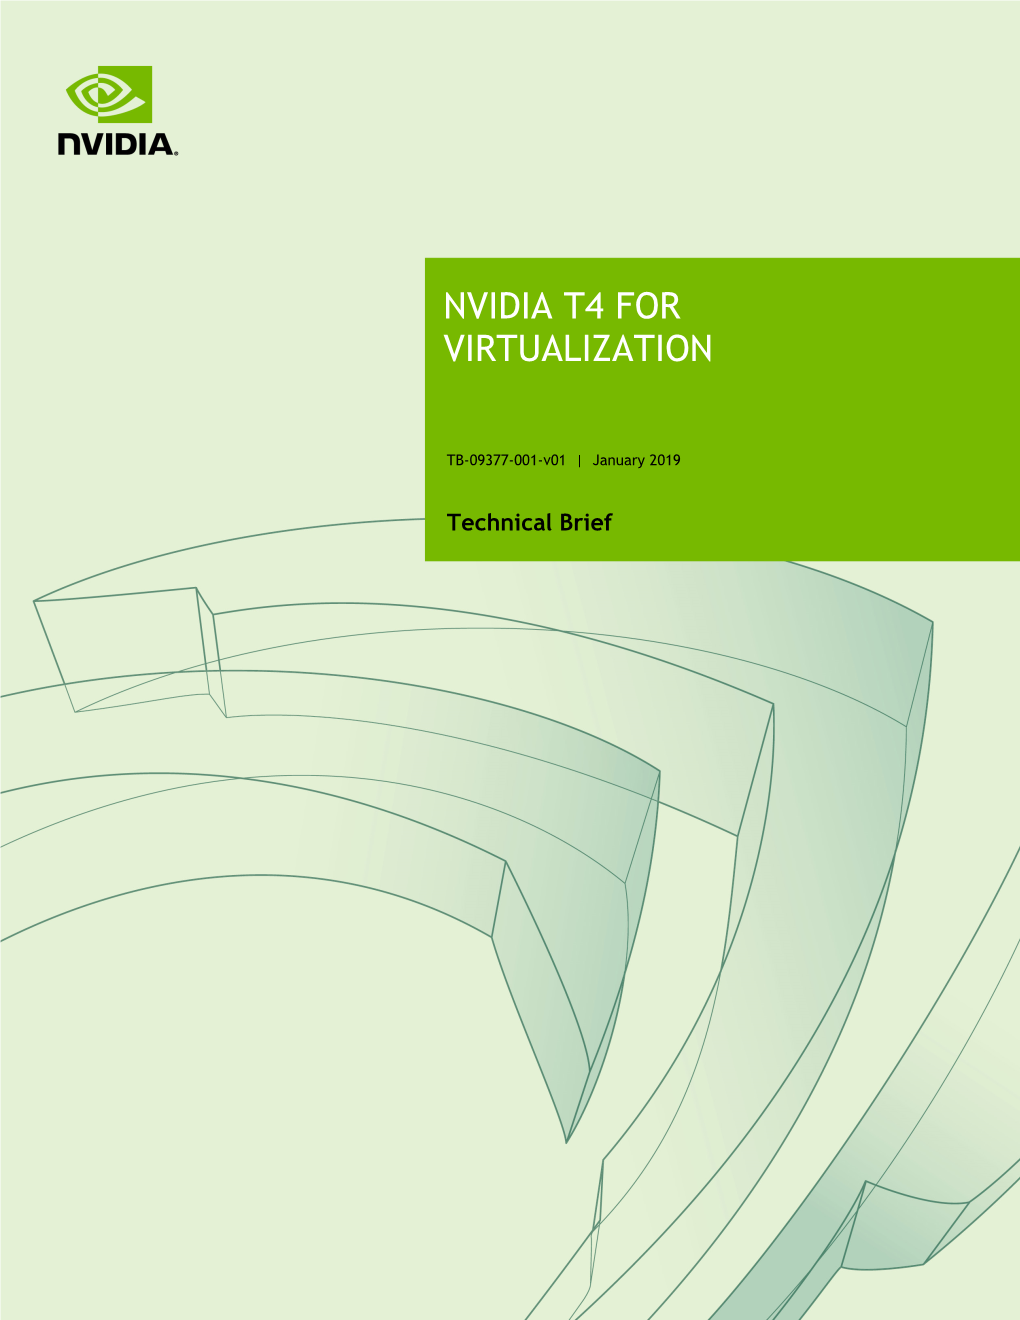 Nvidia T4 for Virtualization